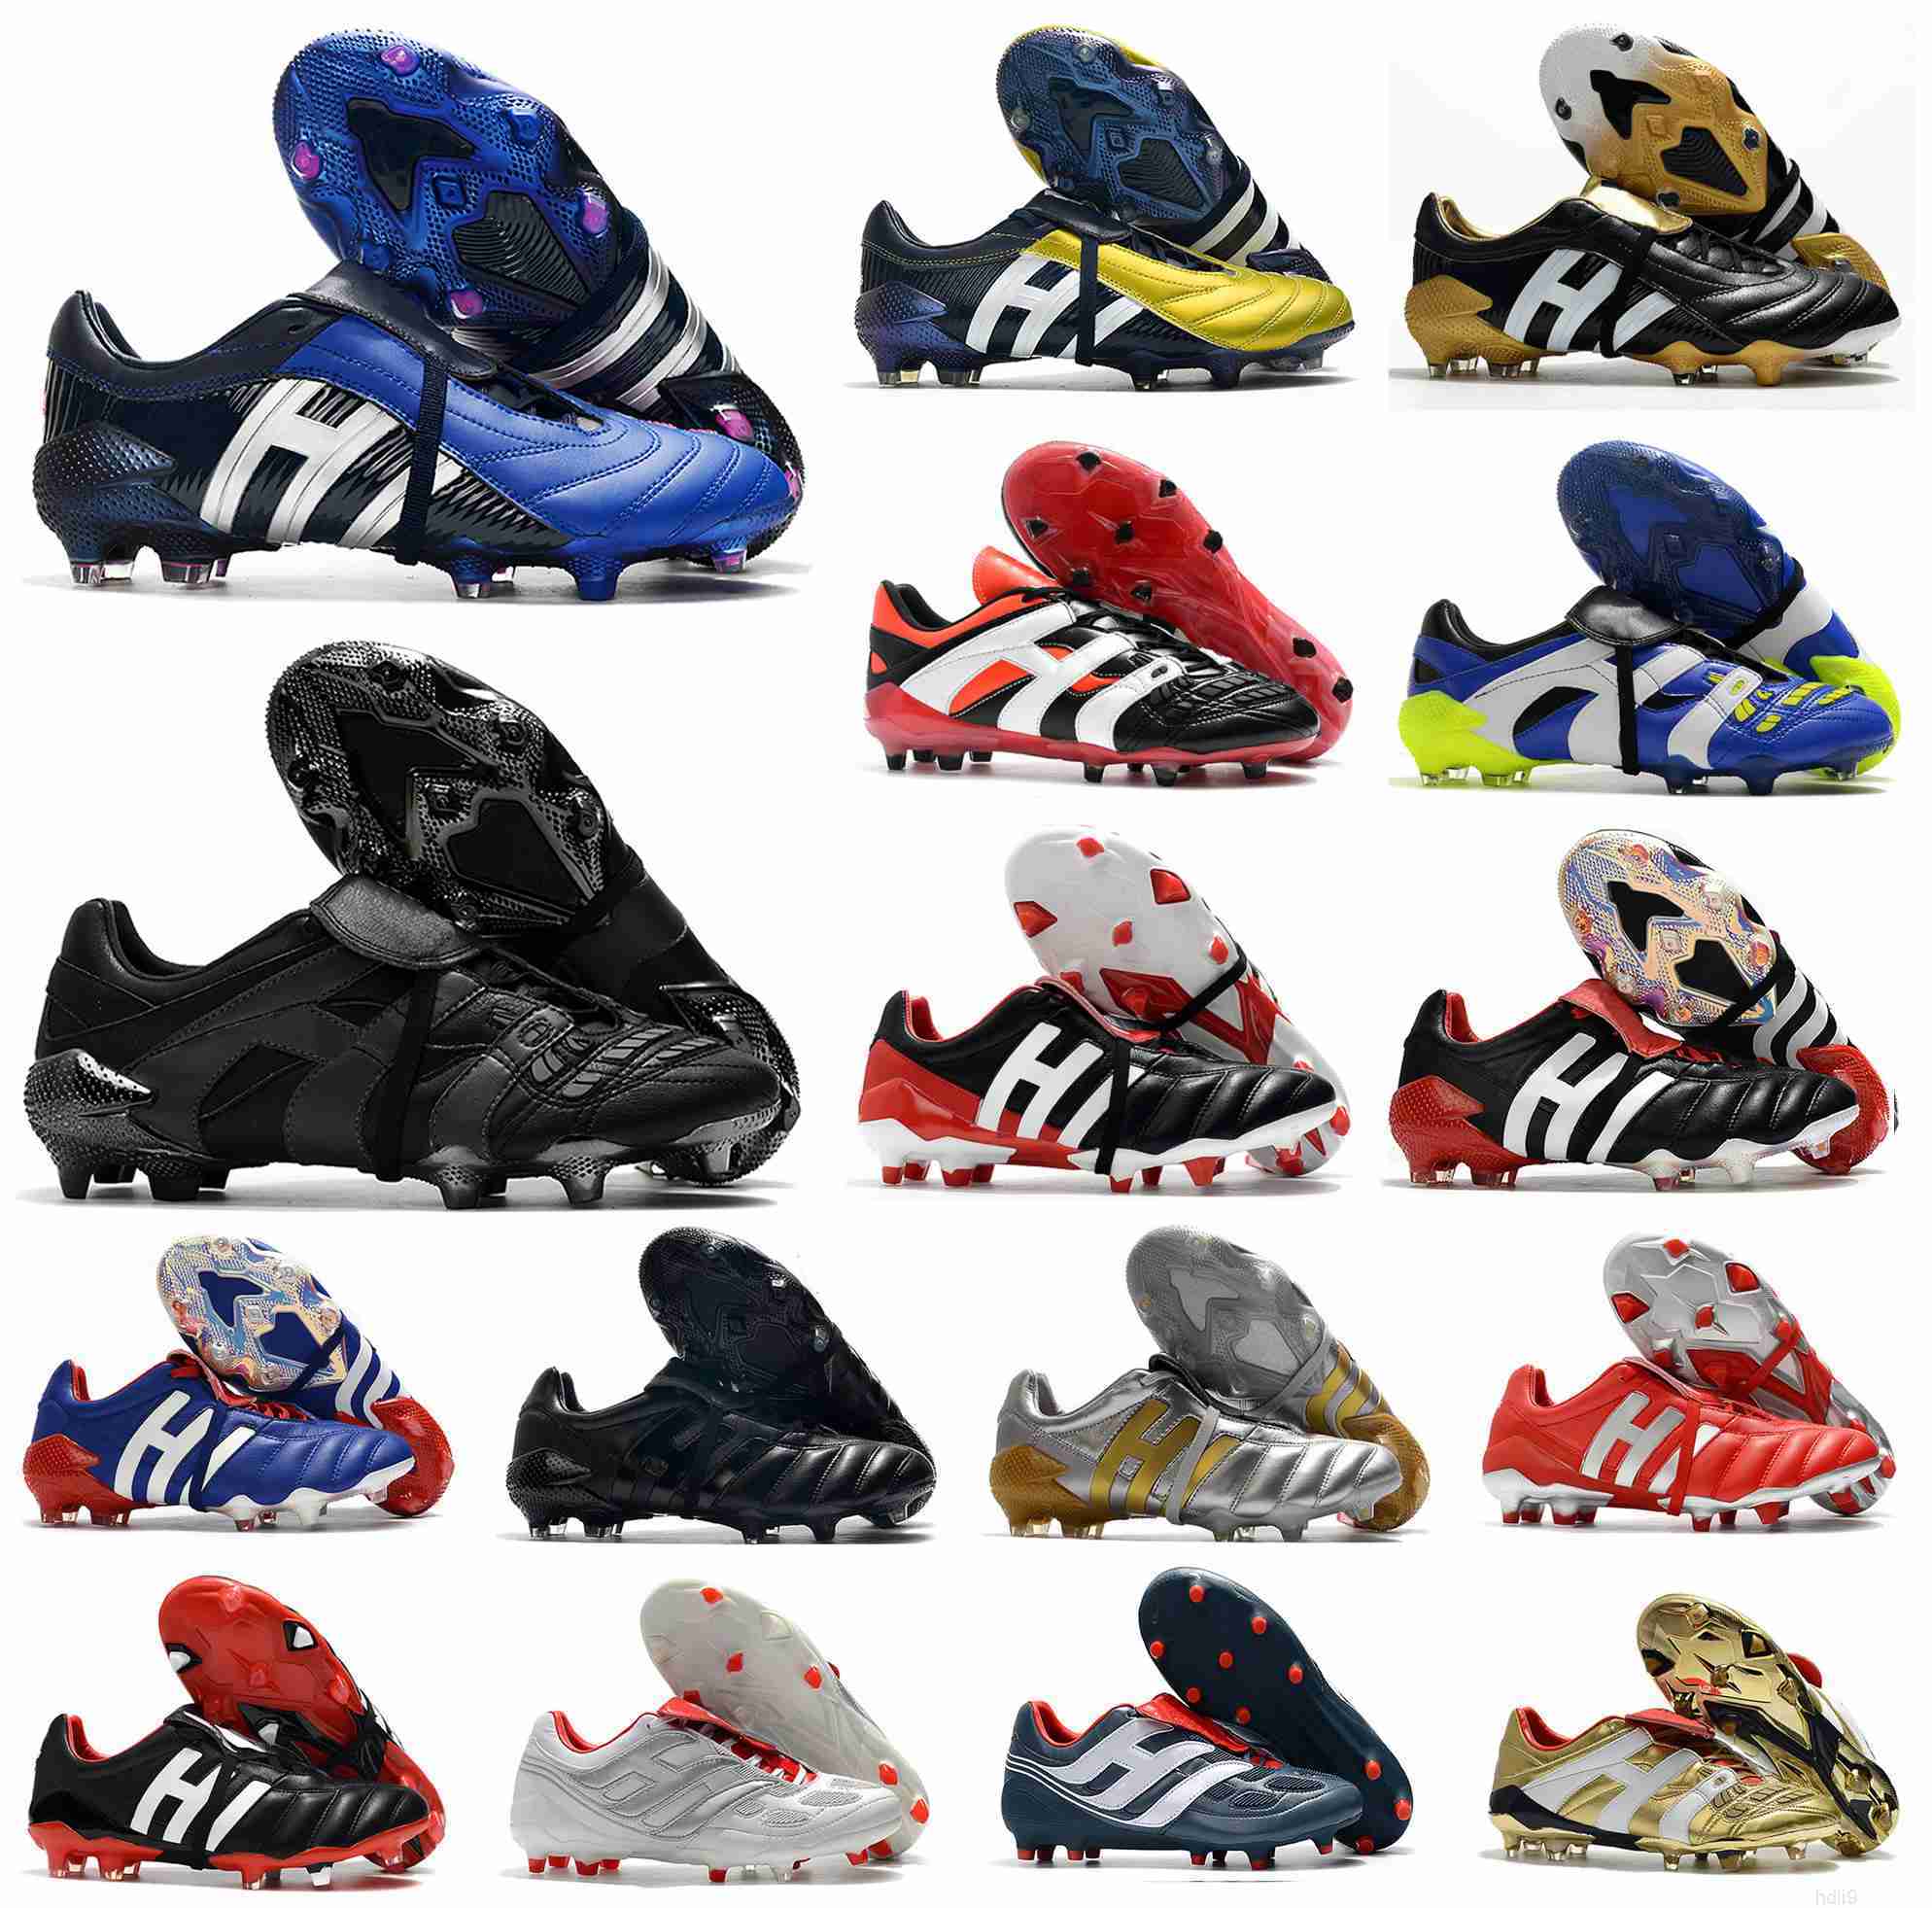 

Men Predator Accelerator Eternal Class 20 Soccer Shoes Mutator Mania Tormentor Electricity Precision 20x Fg Db Zz Cleats Football Boots Us6.5-11, 1 fg